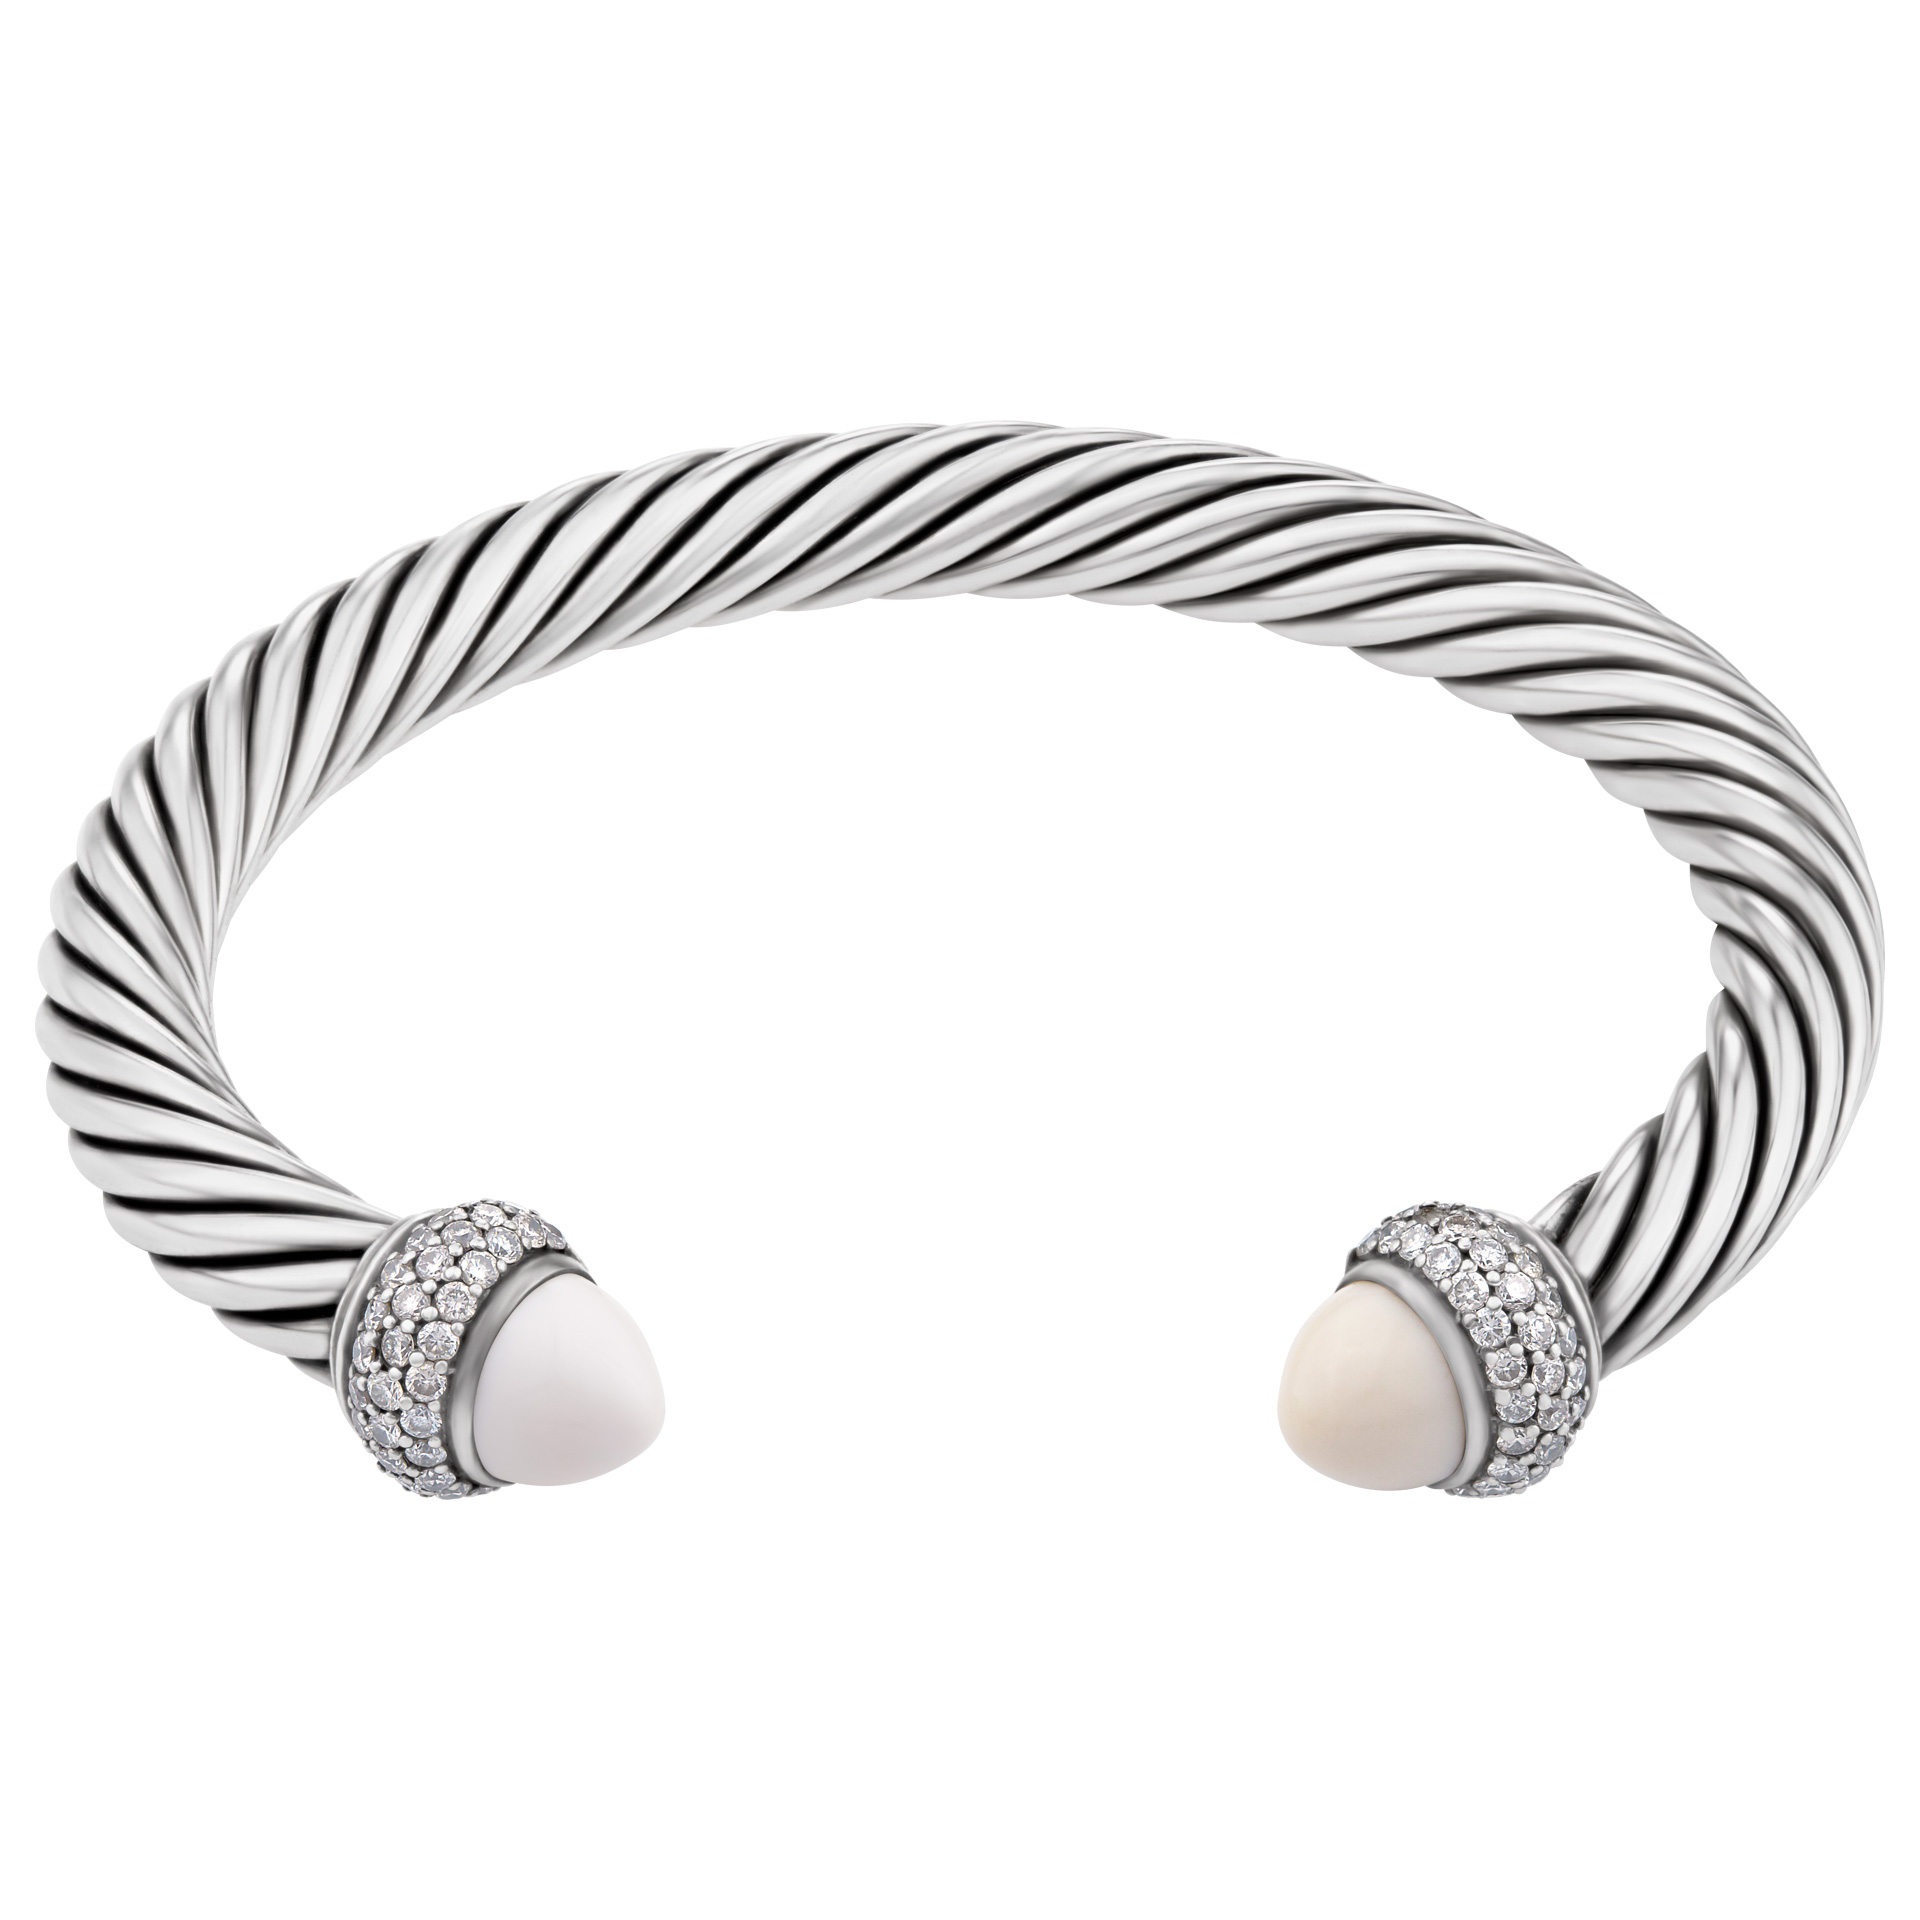 David Yurman Cable Classics Bracelet With Moon Quartz And Diamonds